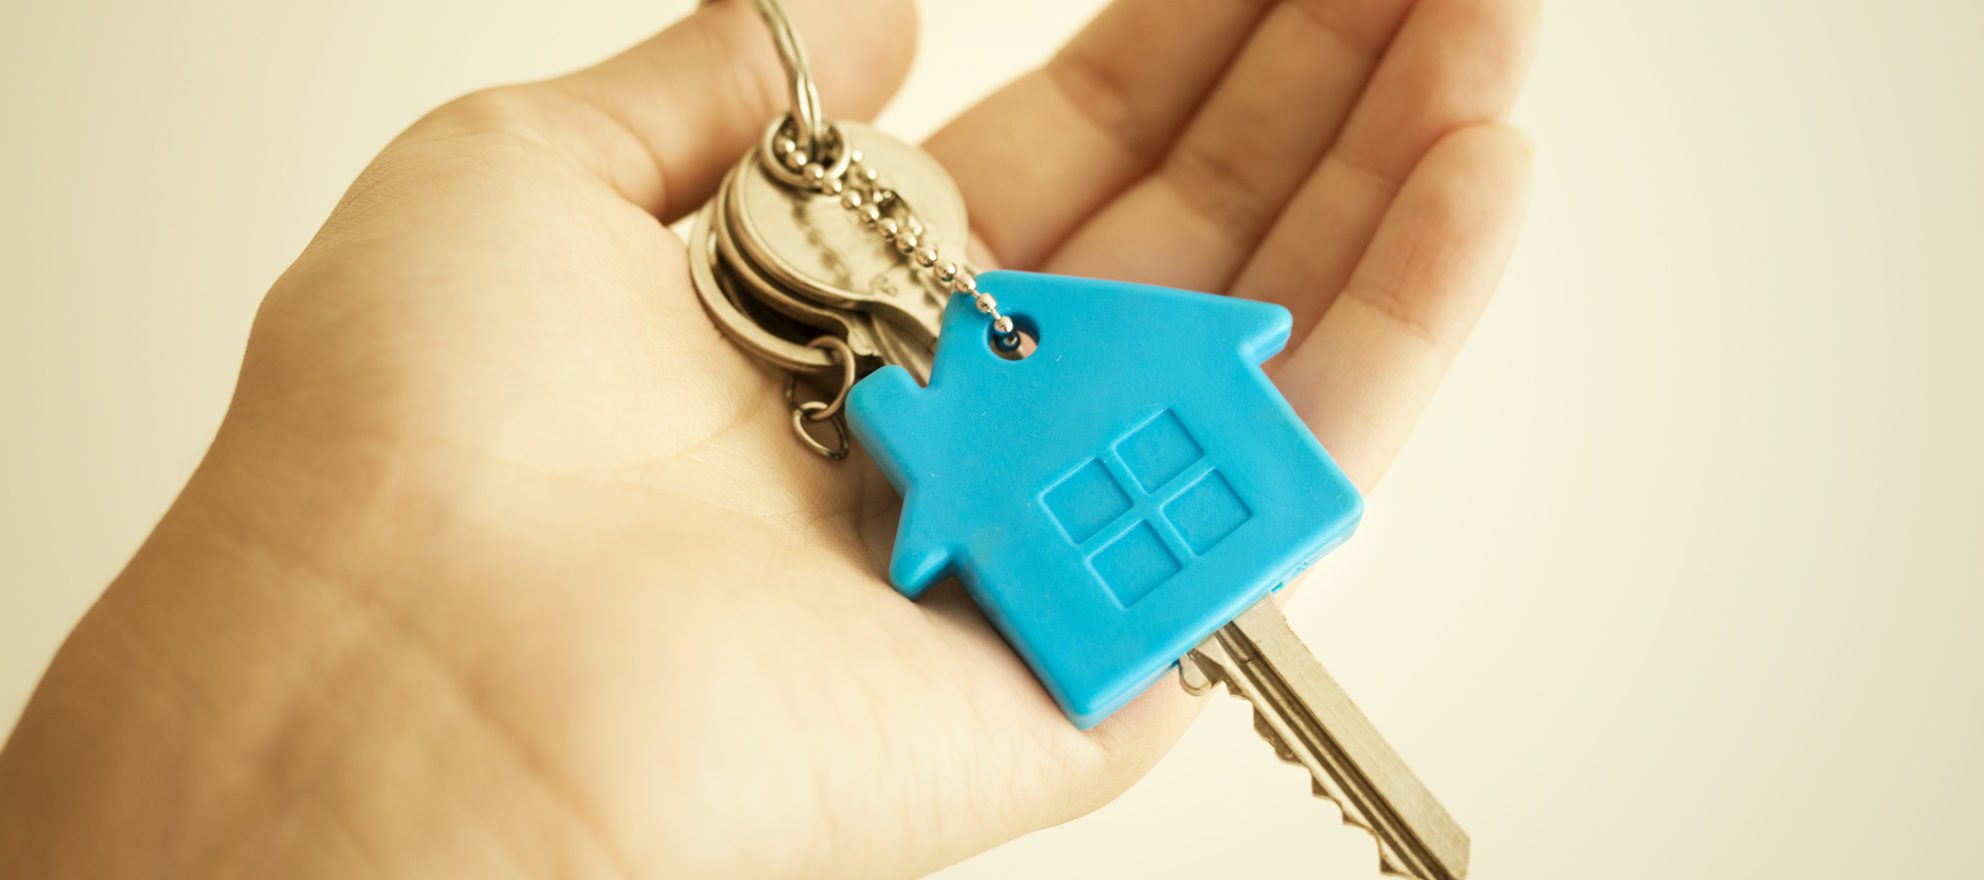 Забыли ключи от квартиры. Ключи от квартиры. Ключи от квартиры в руке. Ключ в руке. Ключи от новой квартиры.